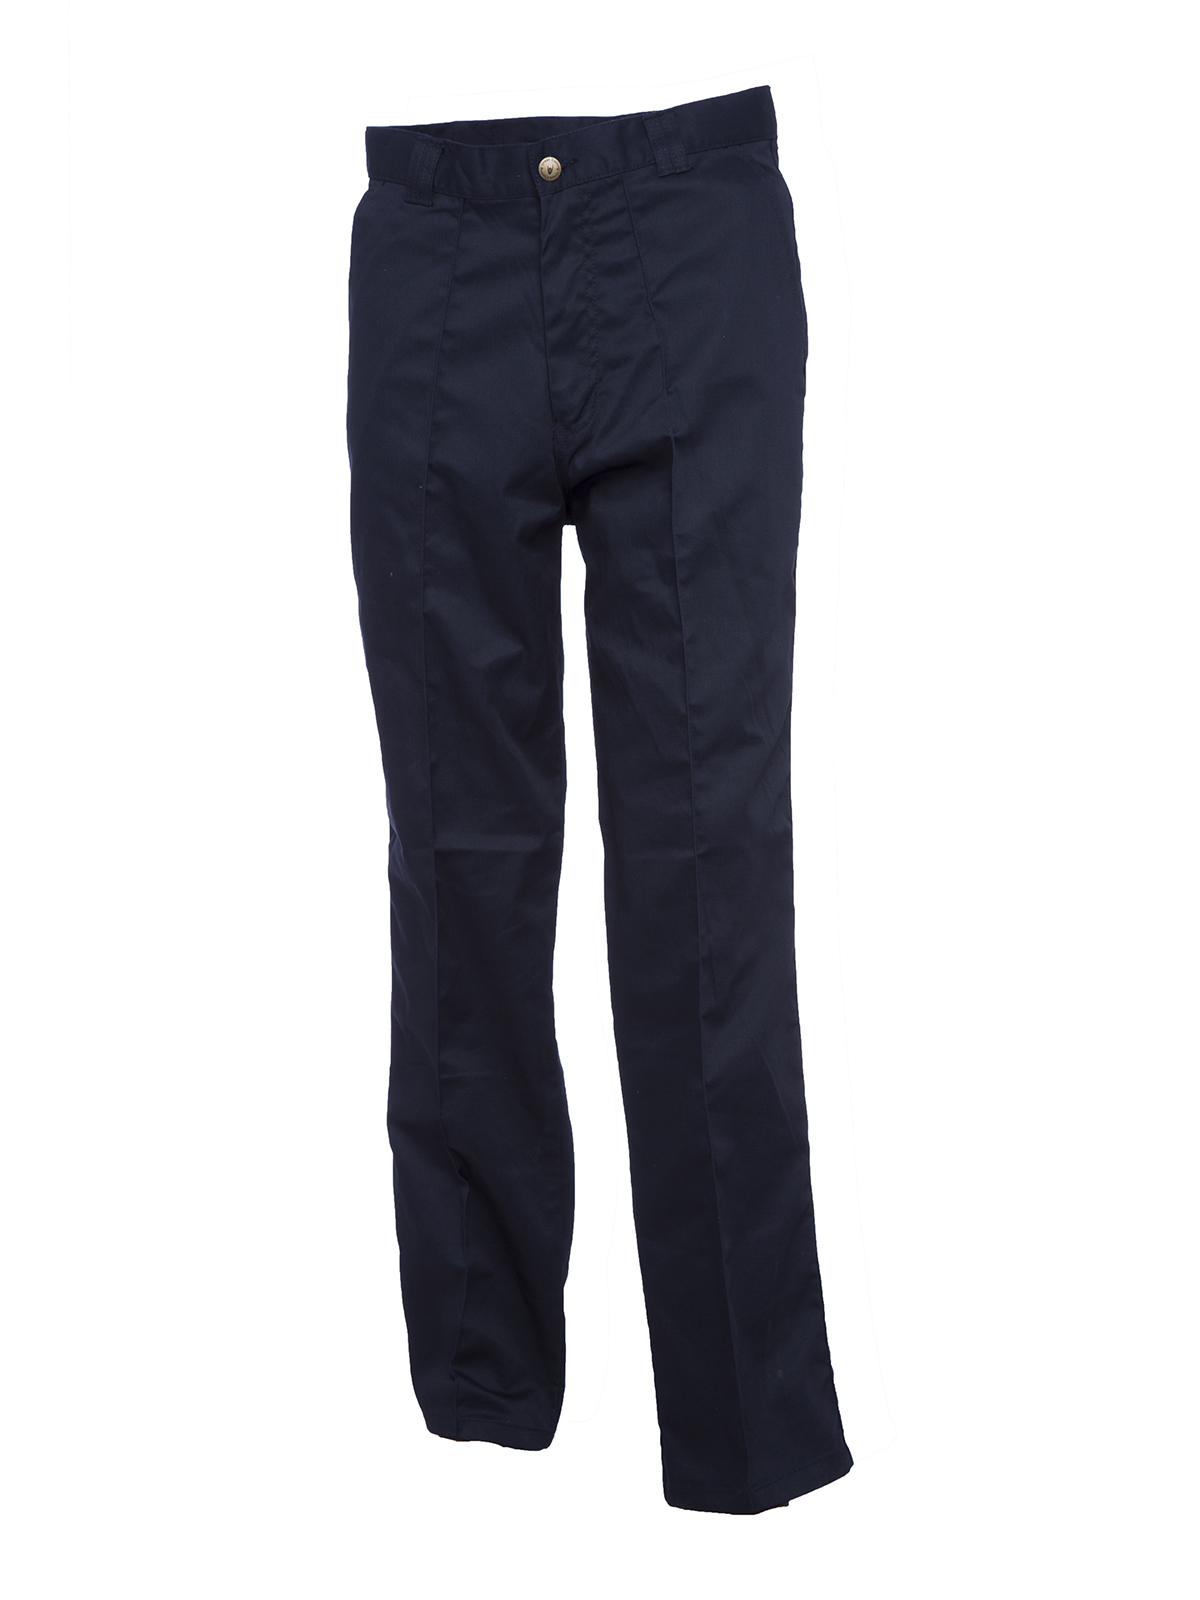 Workwear Trousers, Navy Blue - 36L